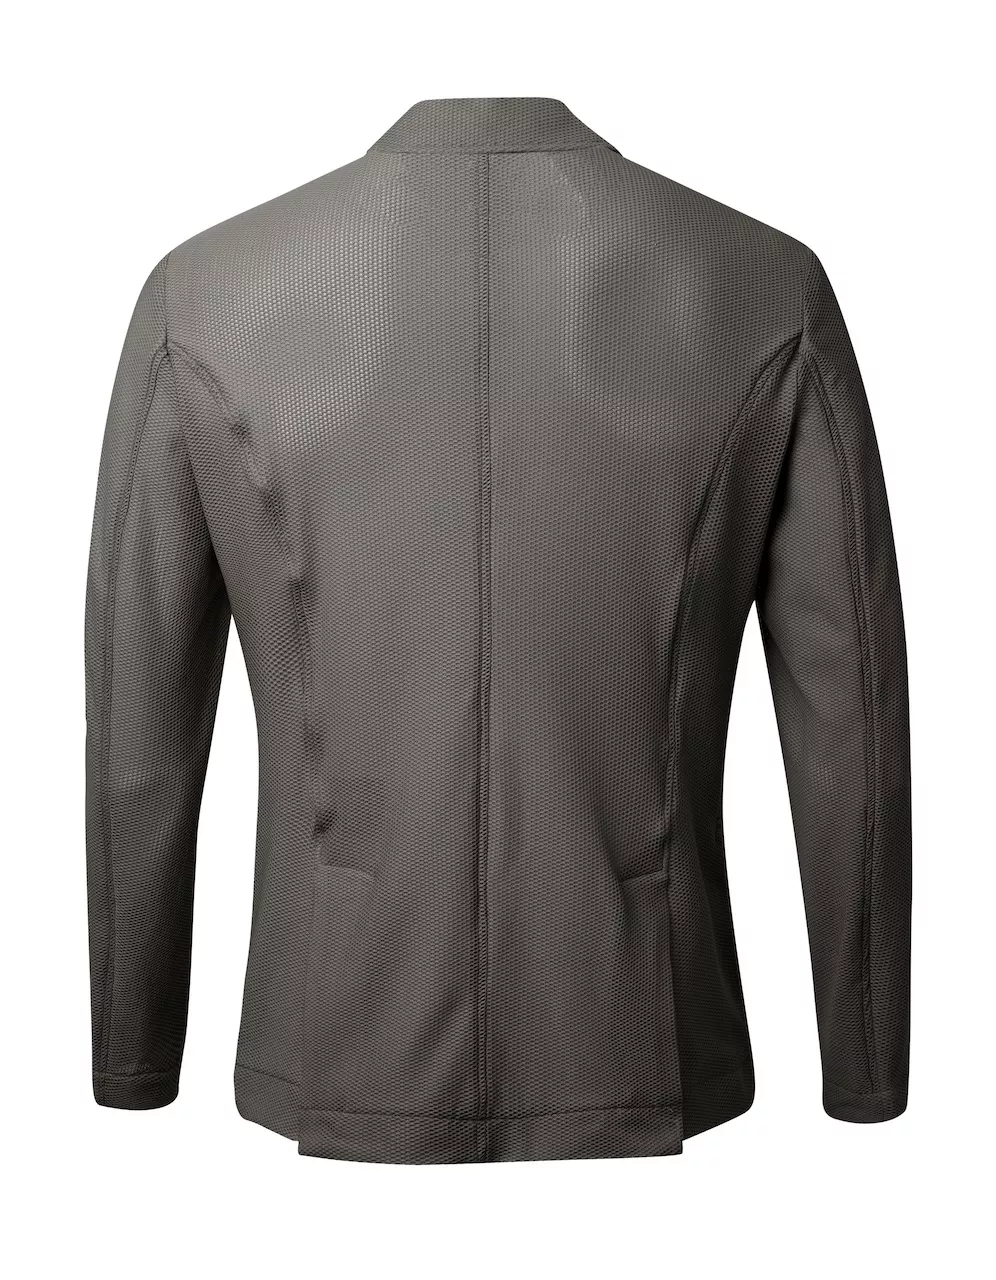 Albanese - Tournament jacket "Motion Lite Men", grey